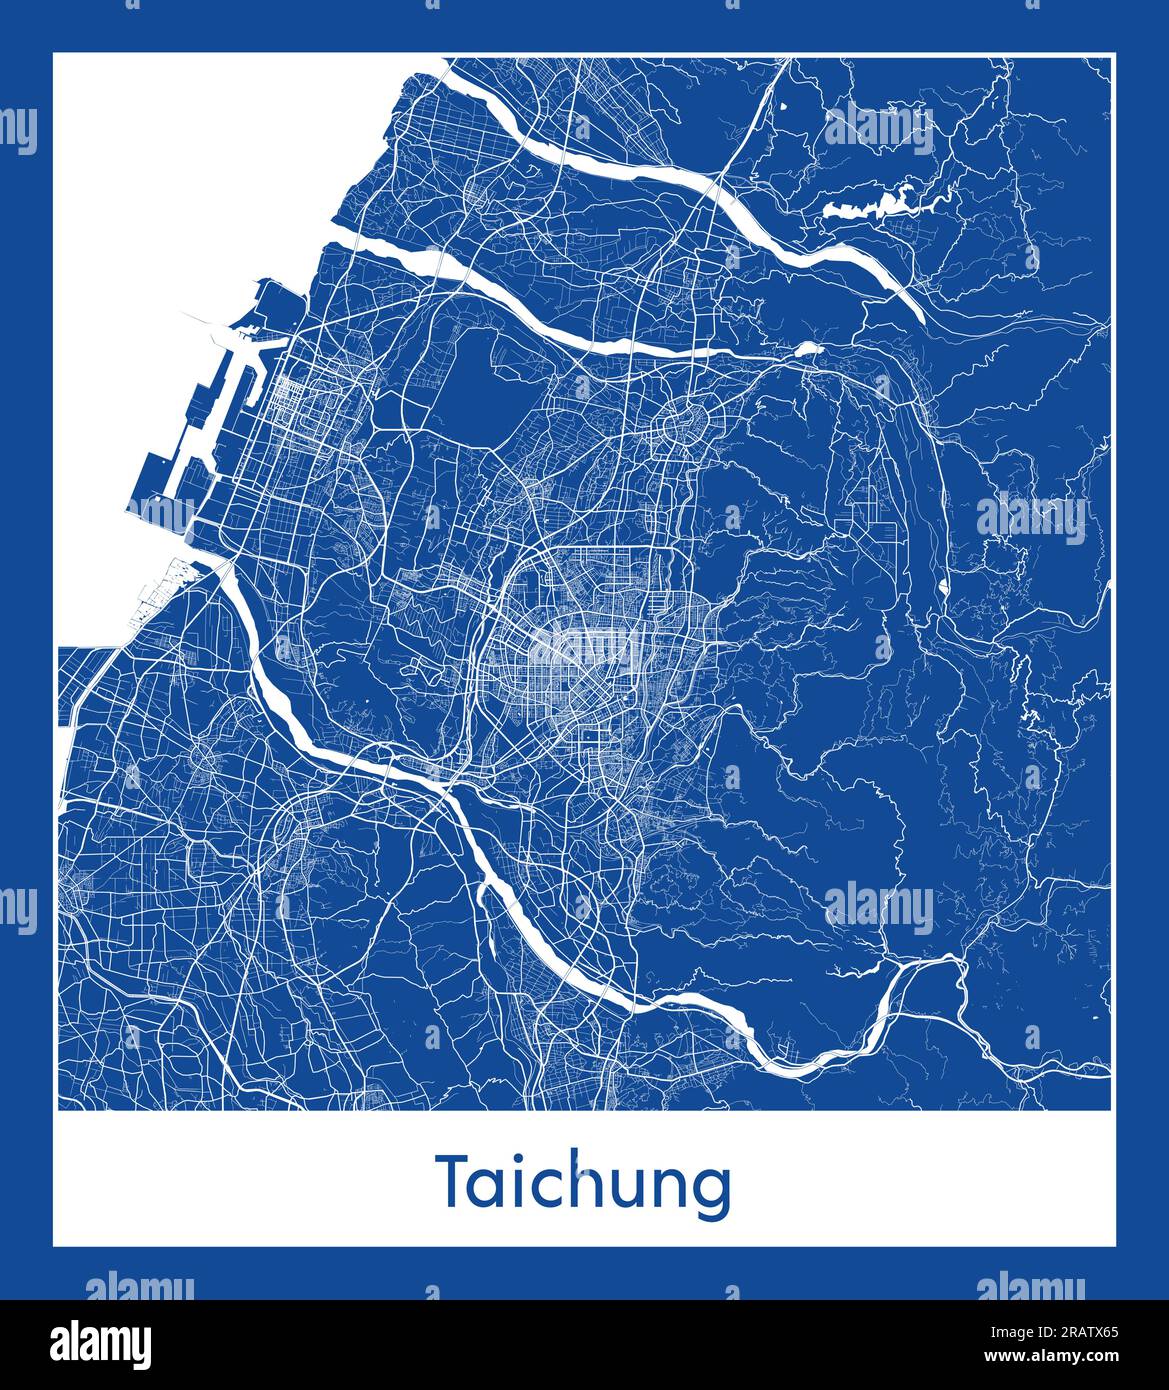 Taichung China Asia City map blue print vector illustration Stock Vector